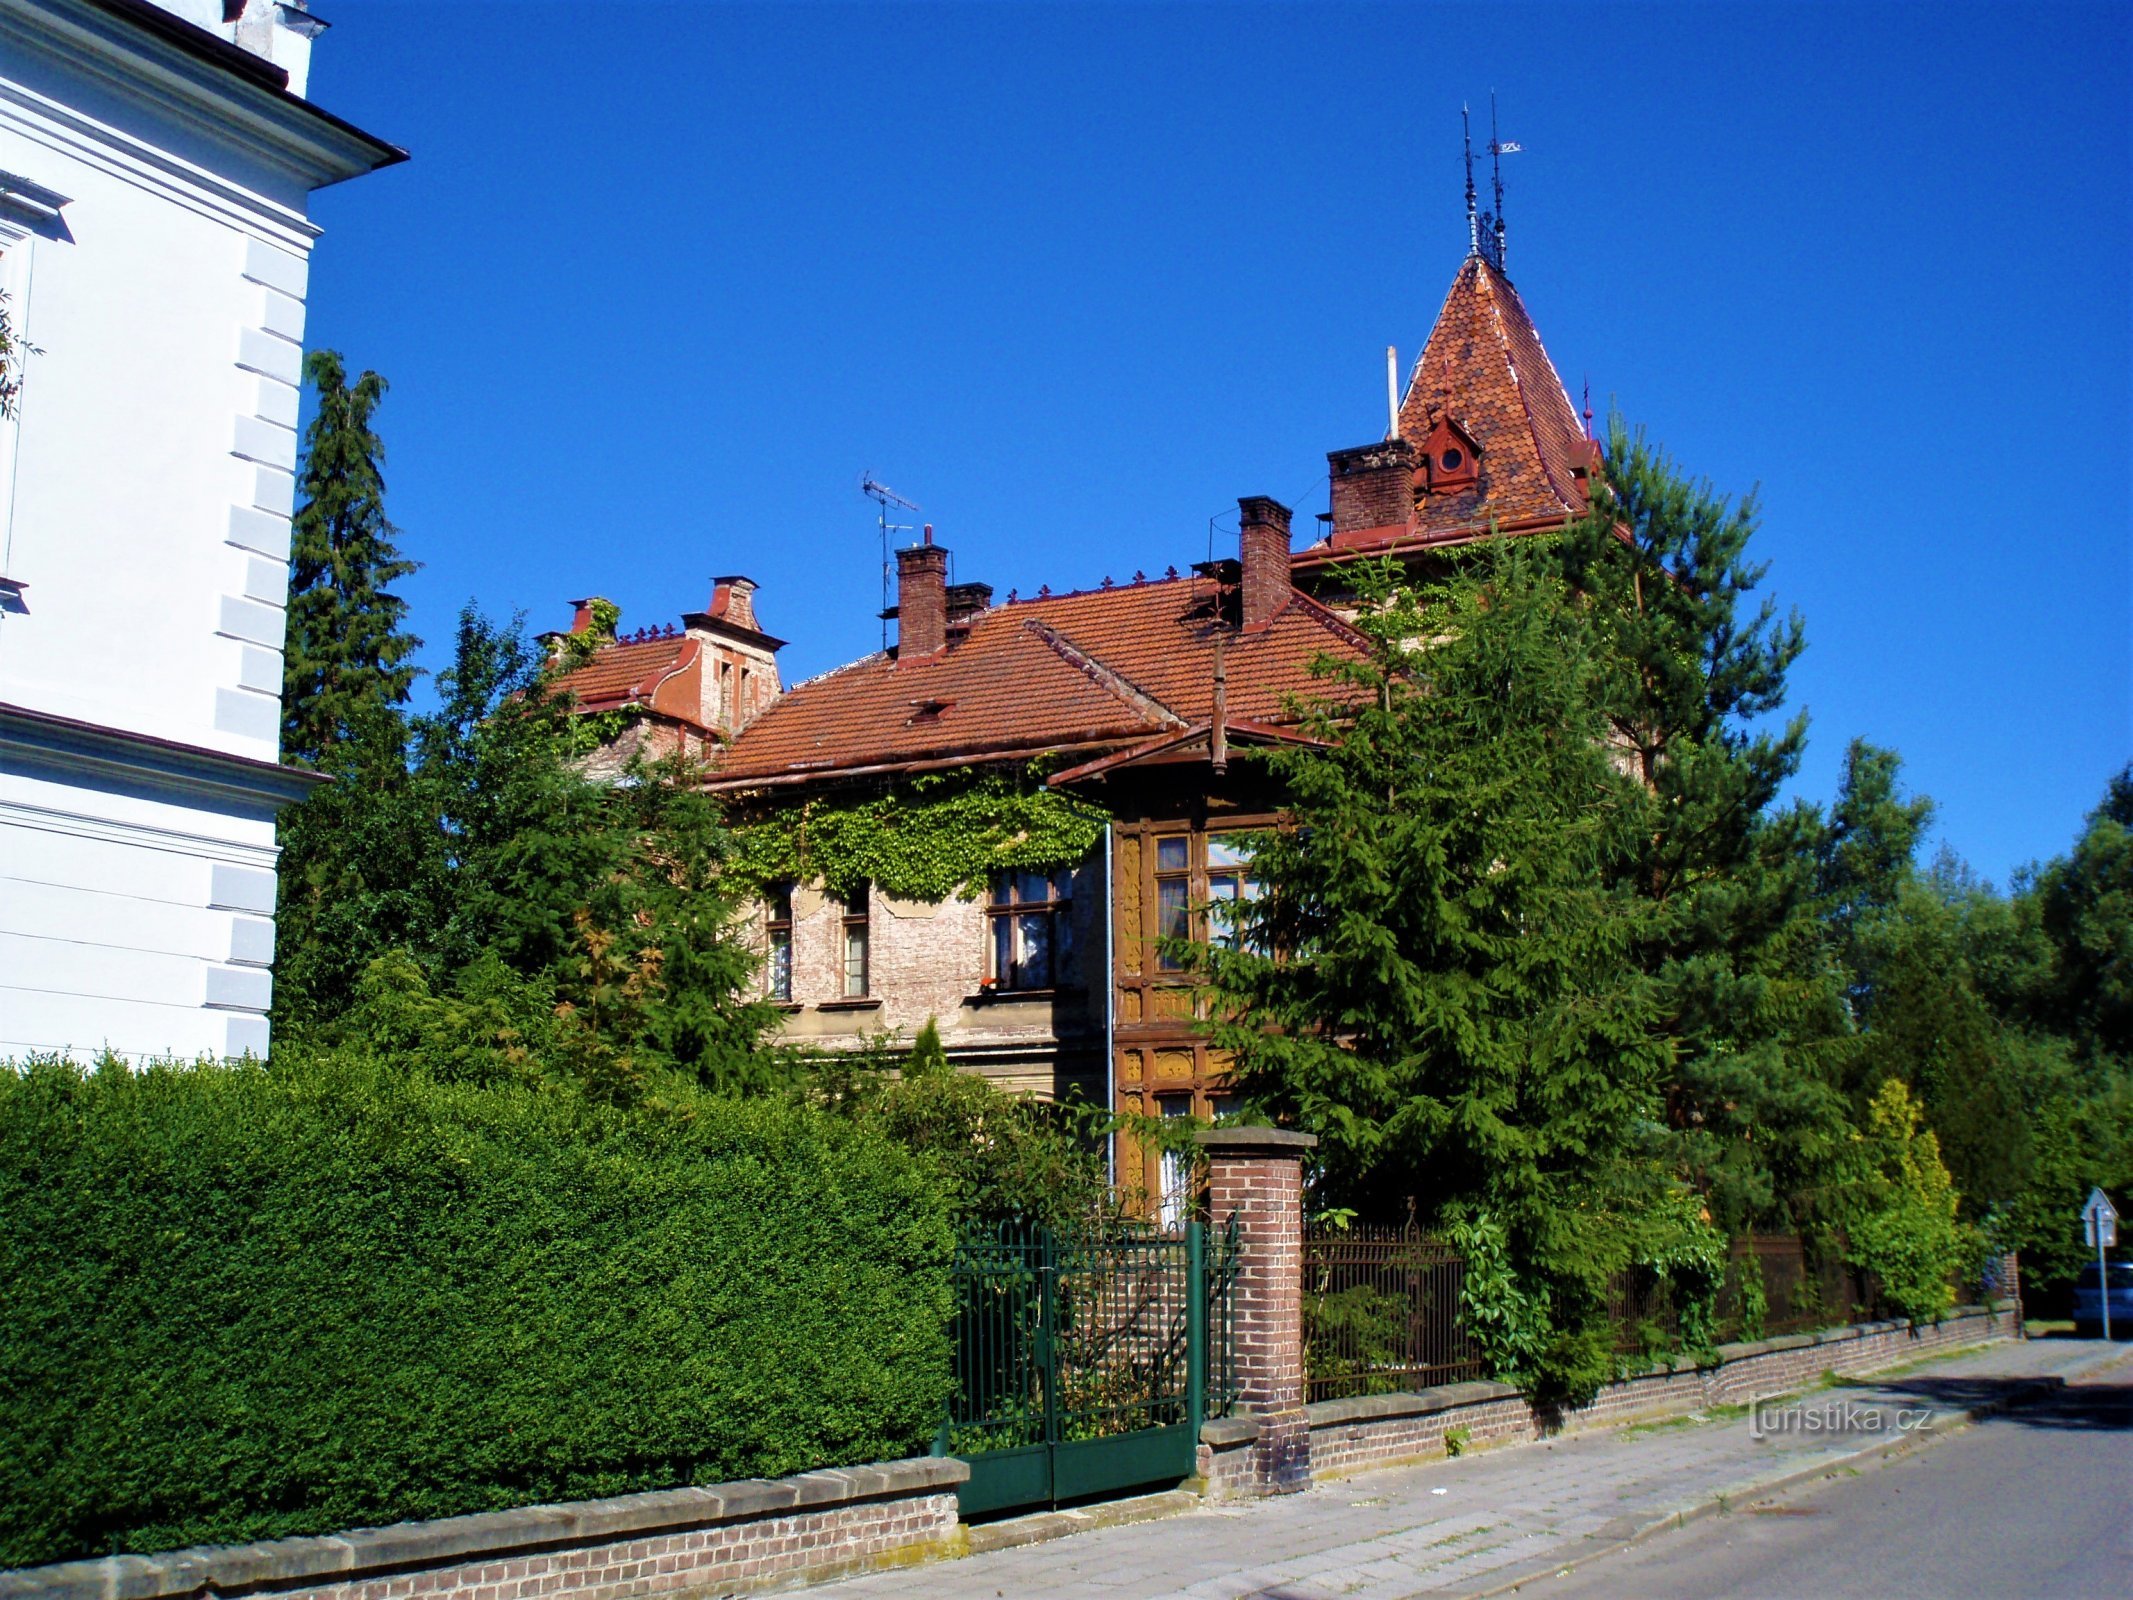 Wiplerjeva vila (Orlické nábřeží št. 376, Hradec Králové, 27.6.2010. XNUMX. XNUMX)